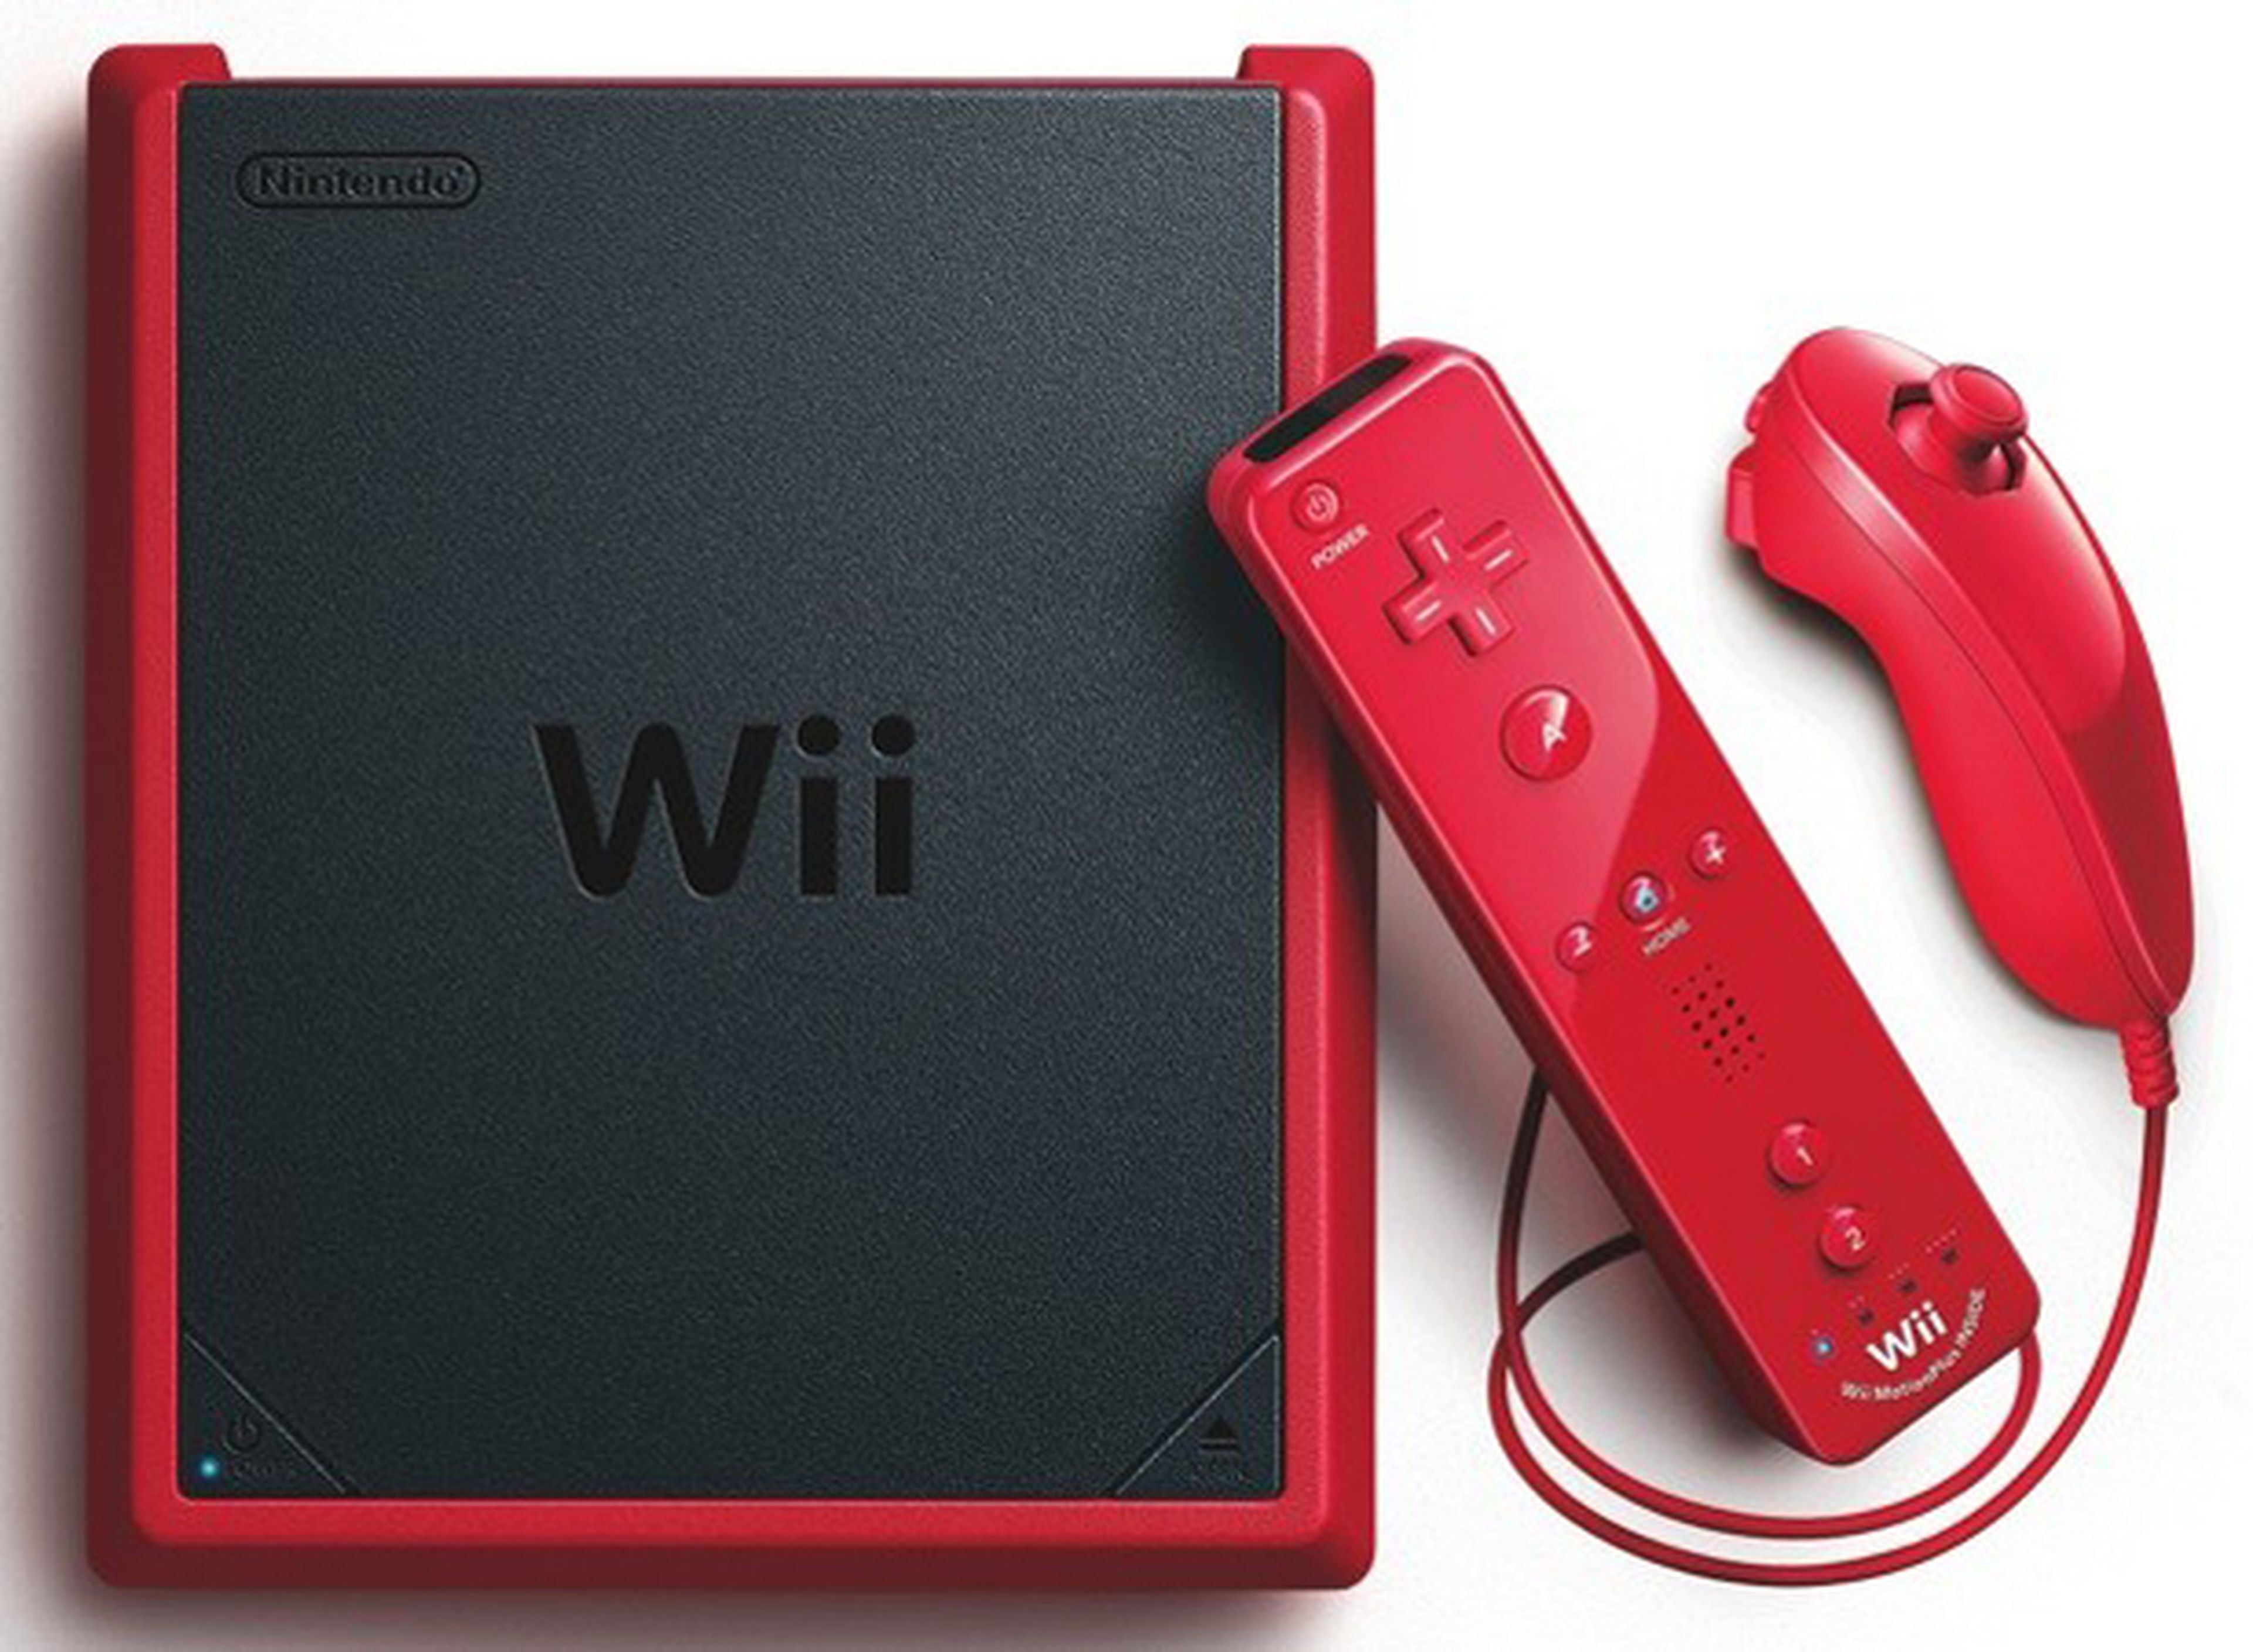 Nintendo confirma Wii Mini. Será exclusiva en Canadá a 99$